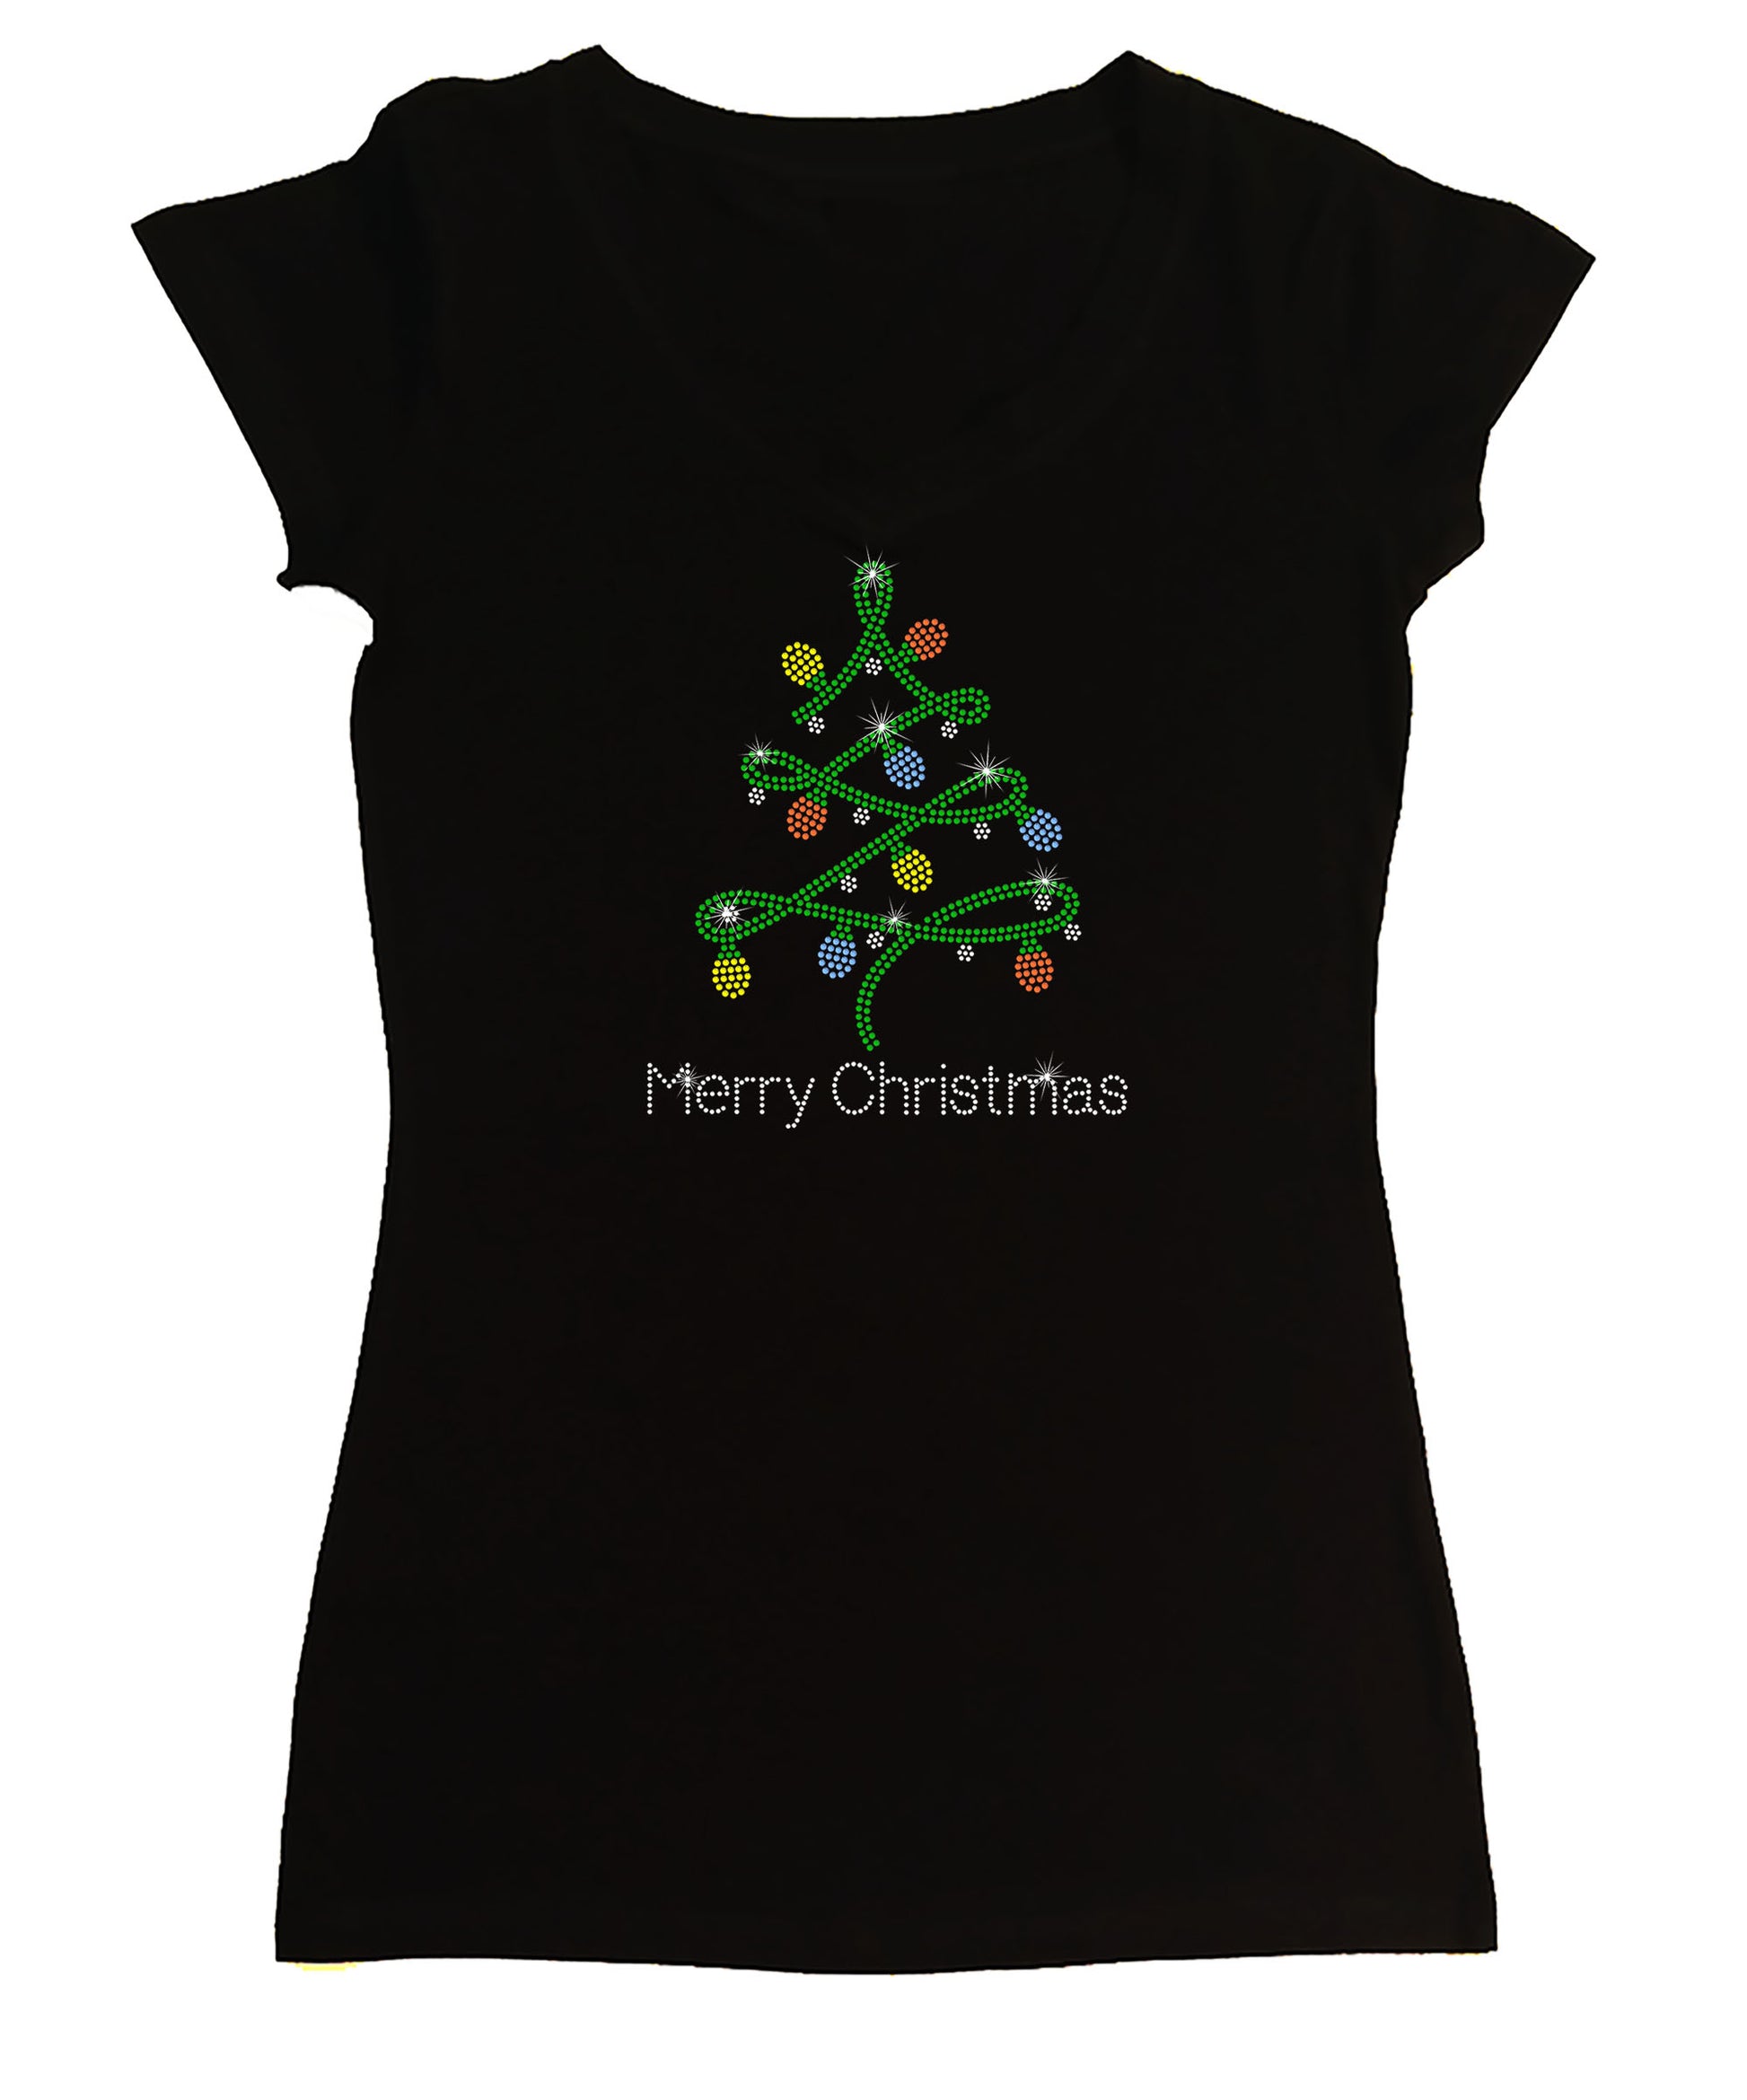 Women's Rhinestone Fitted Tight Snug Shirt Merry Christmas Tree with Lights - Christmas Shirt